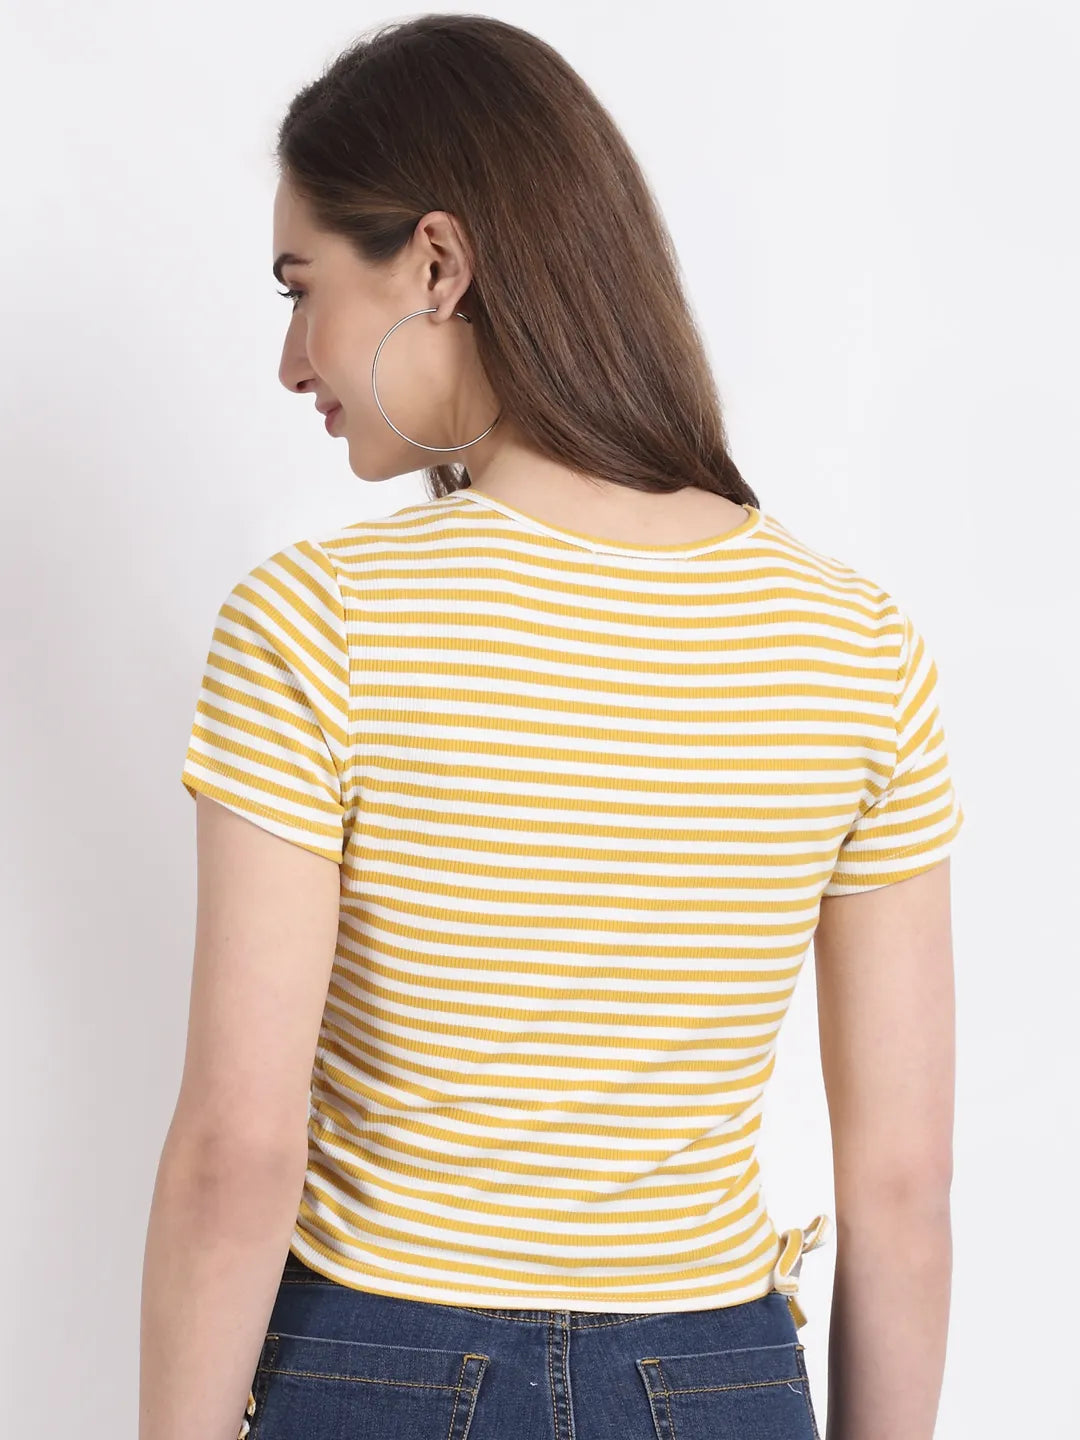 Women Slim-Fit Mustard Striped Cotton Top